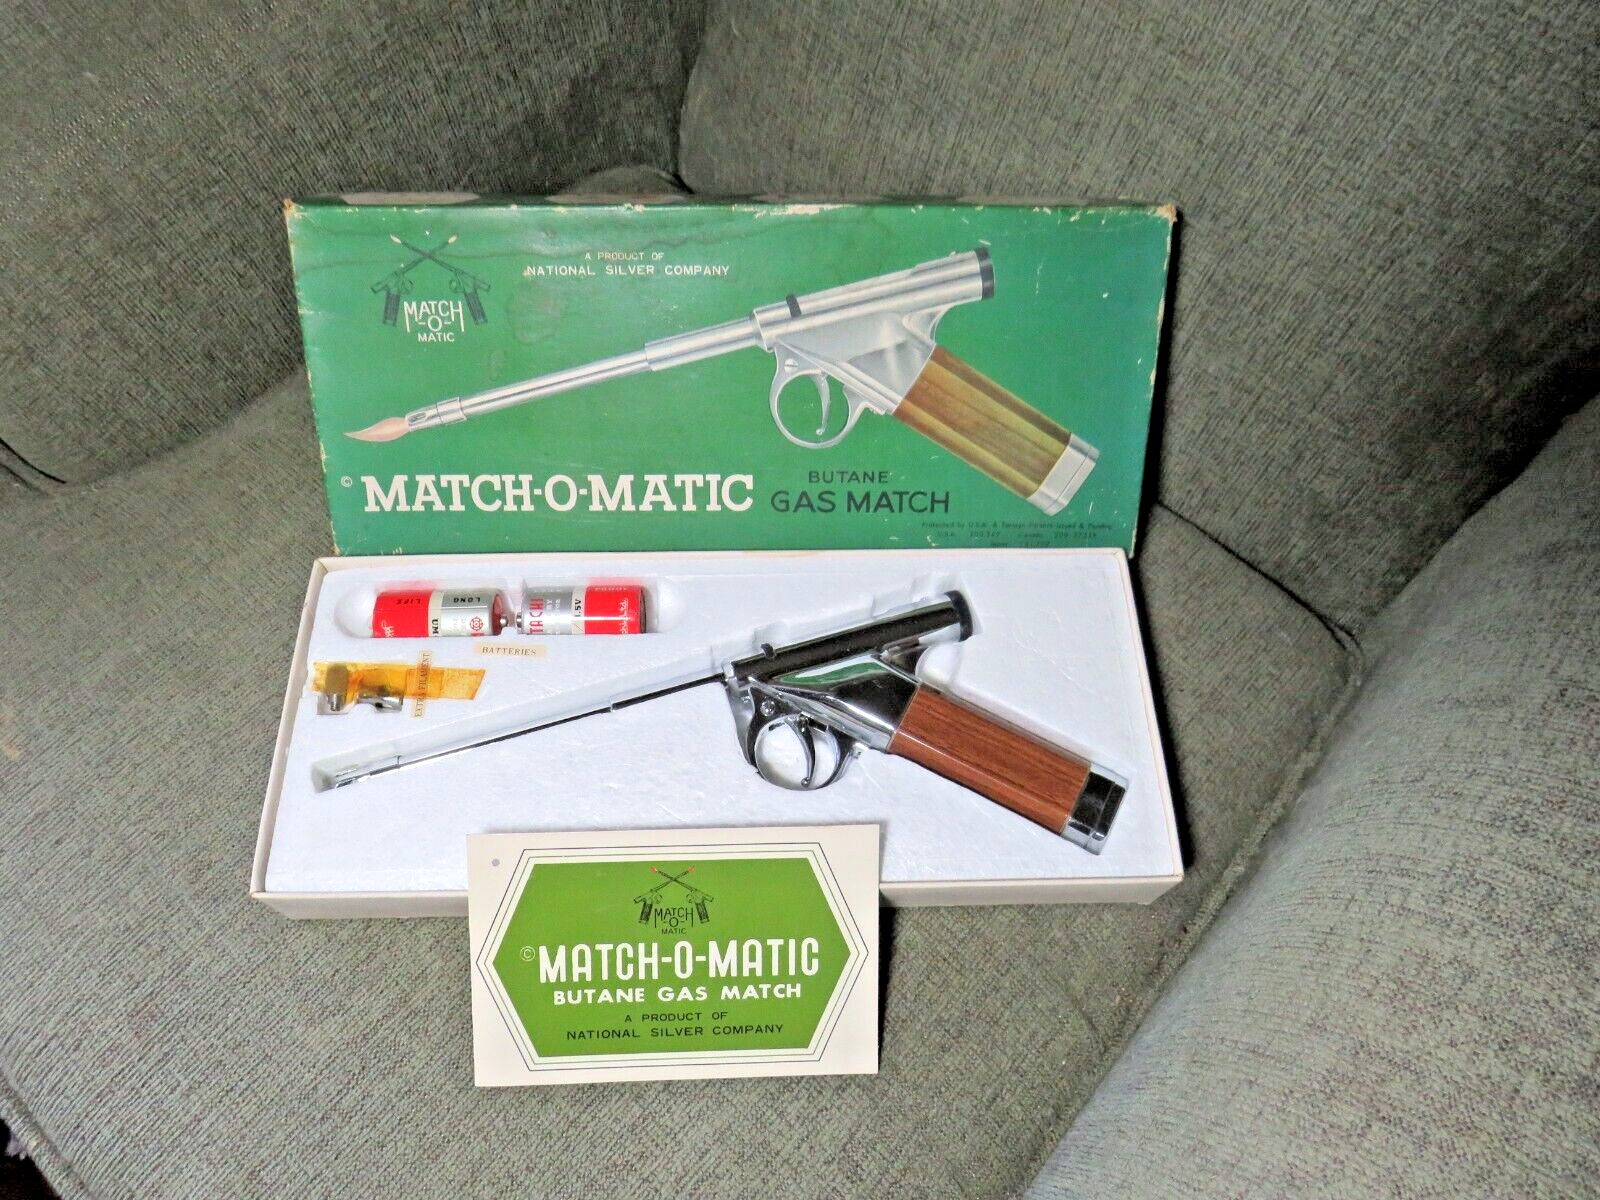 VINTAGE 1960s NATIONAL SILVER COMPANY MATCH O MATIC BUTANE MATCH GUN R-1666 MIB